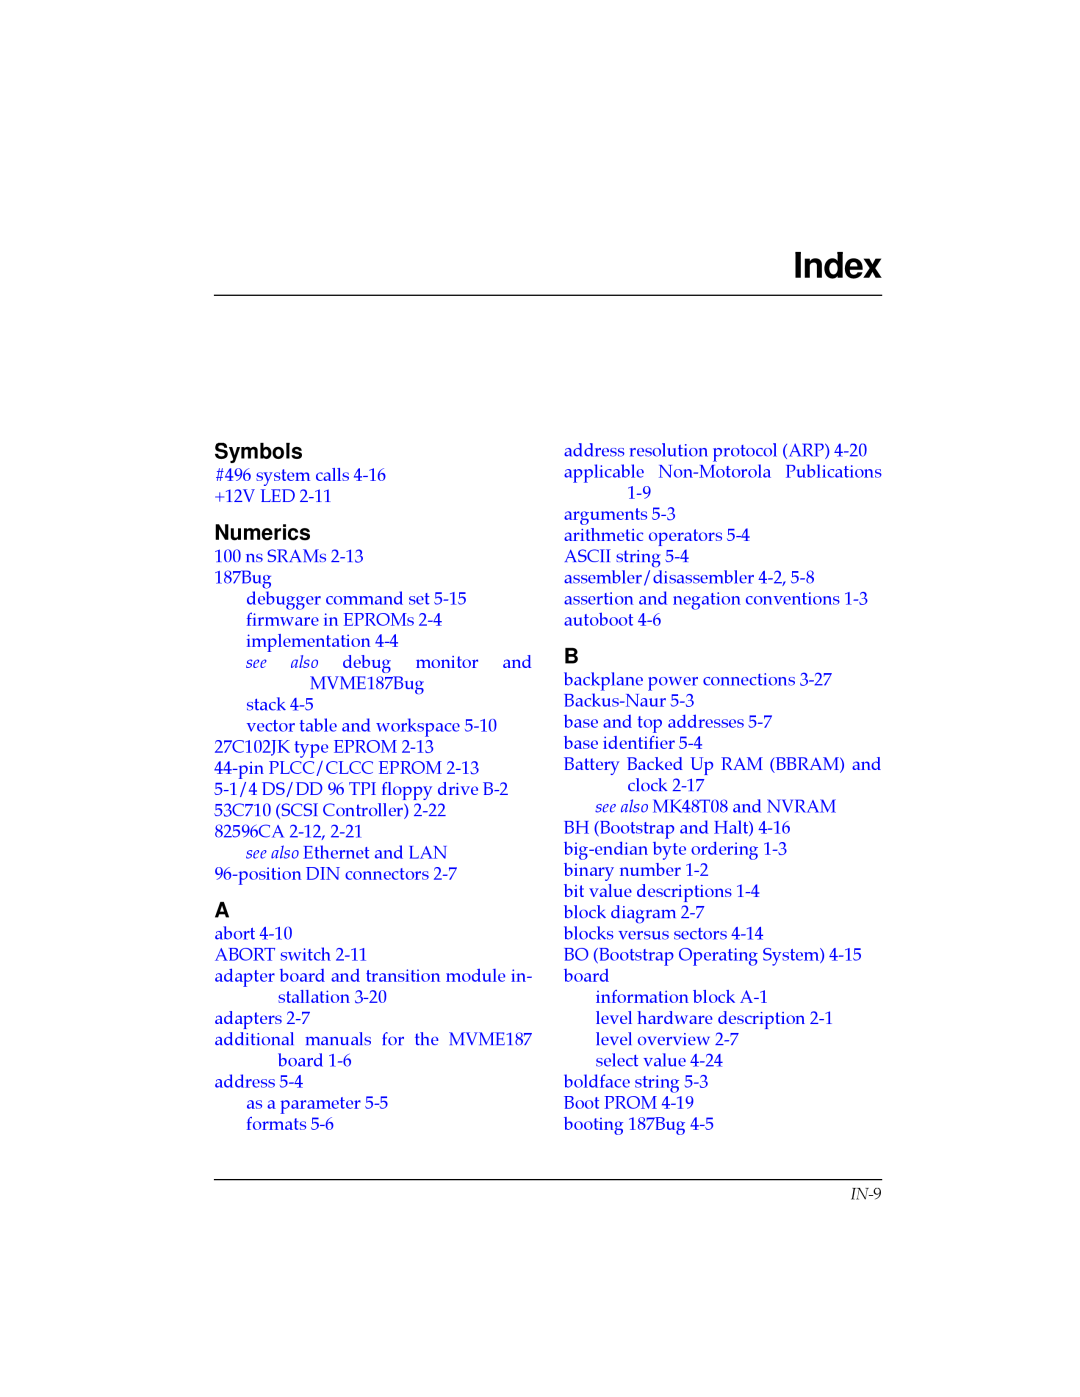 Motorola MVME187 manual Index, Symbols, Numerics 